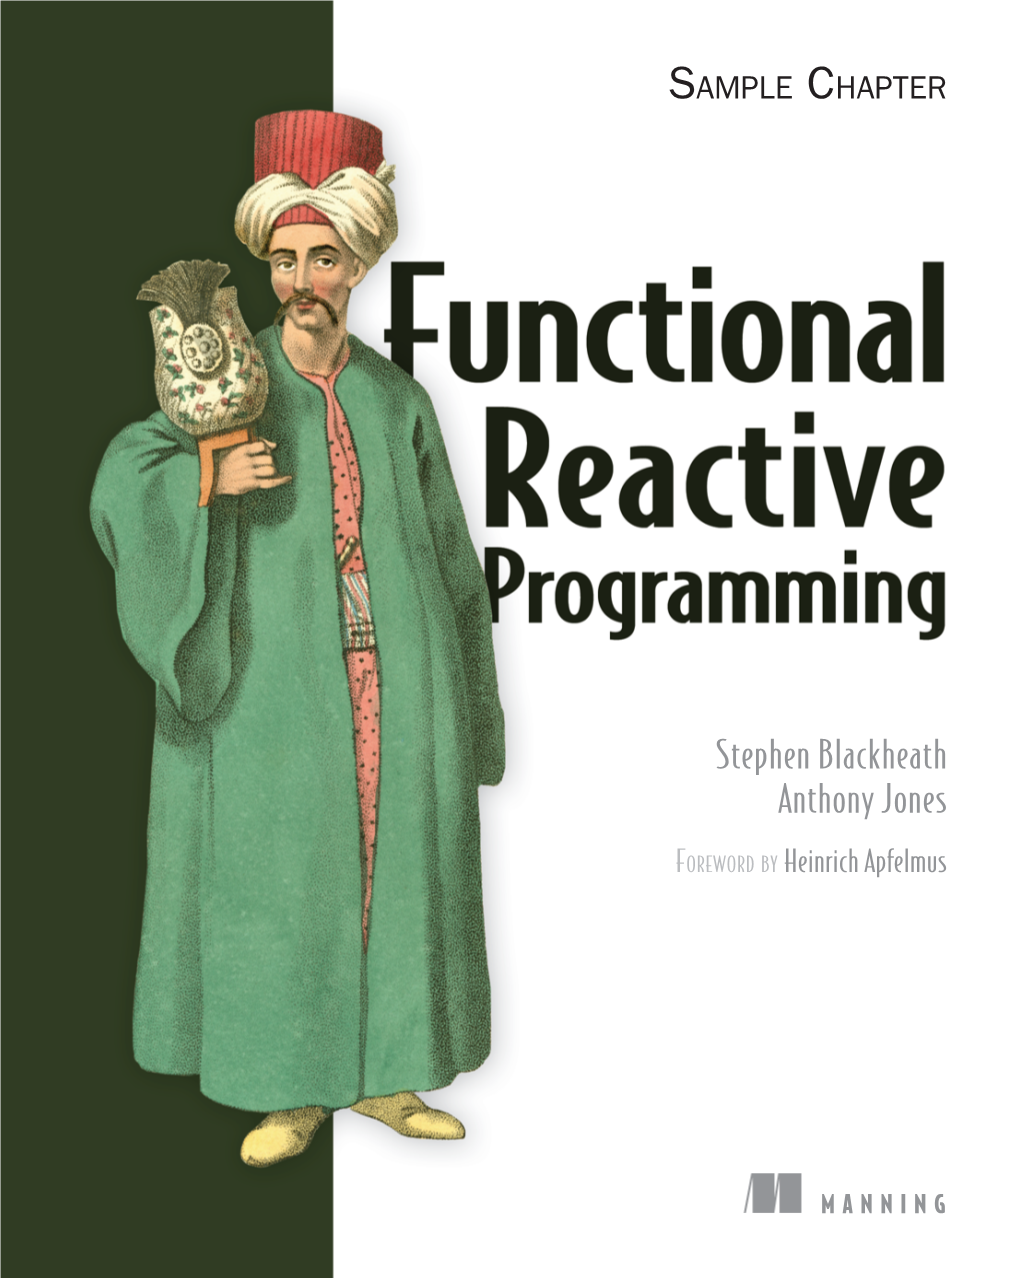 Functional Reactive Programming by Stephen Blackheath, Anthony Jones